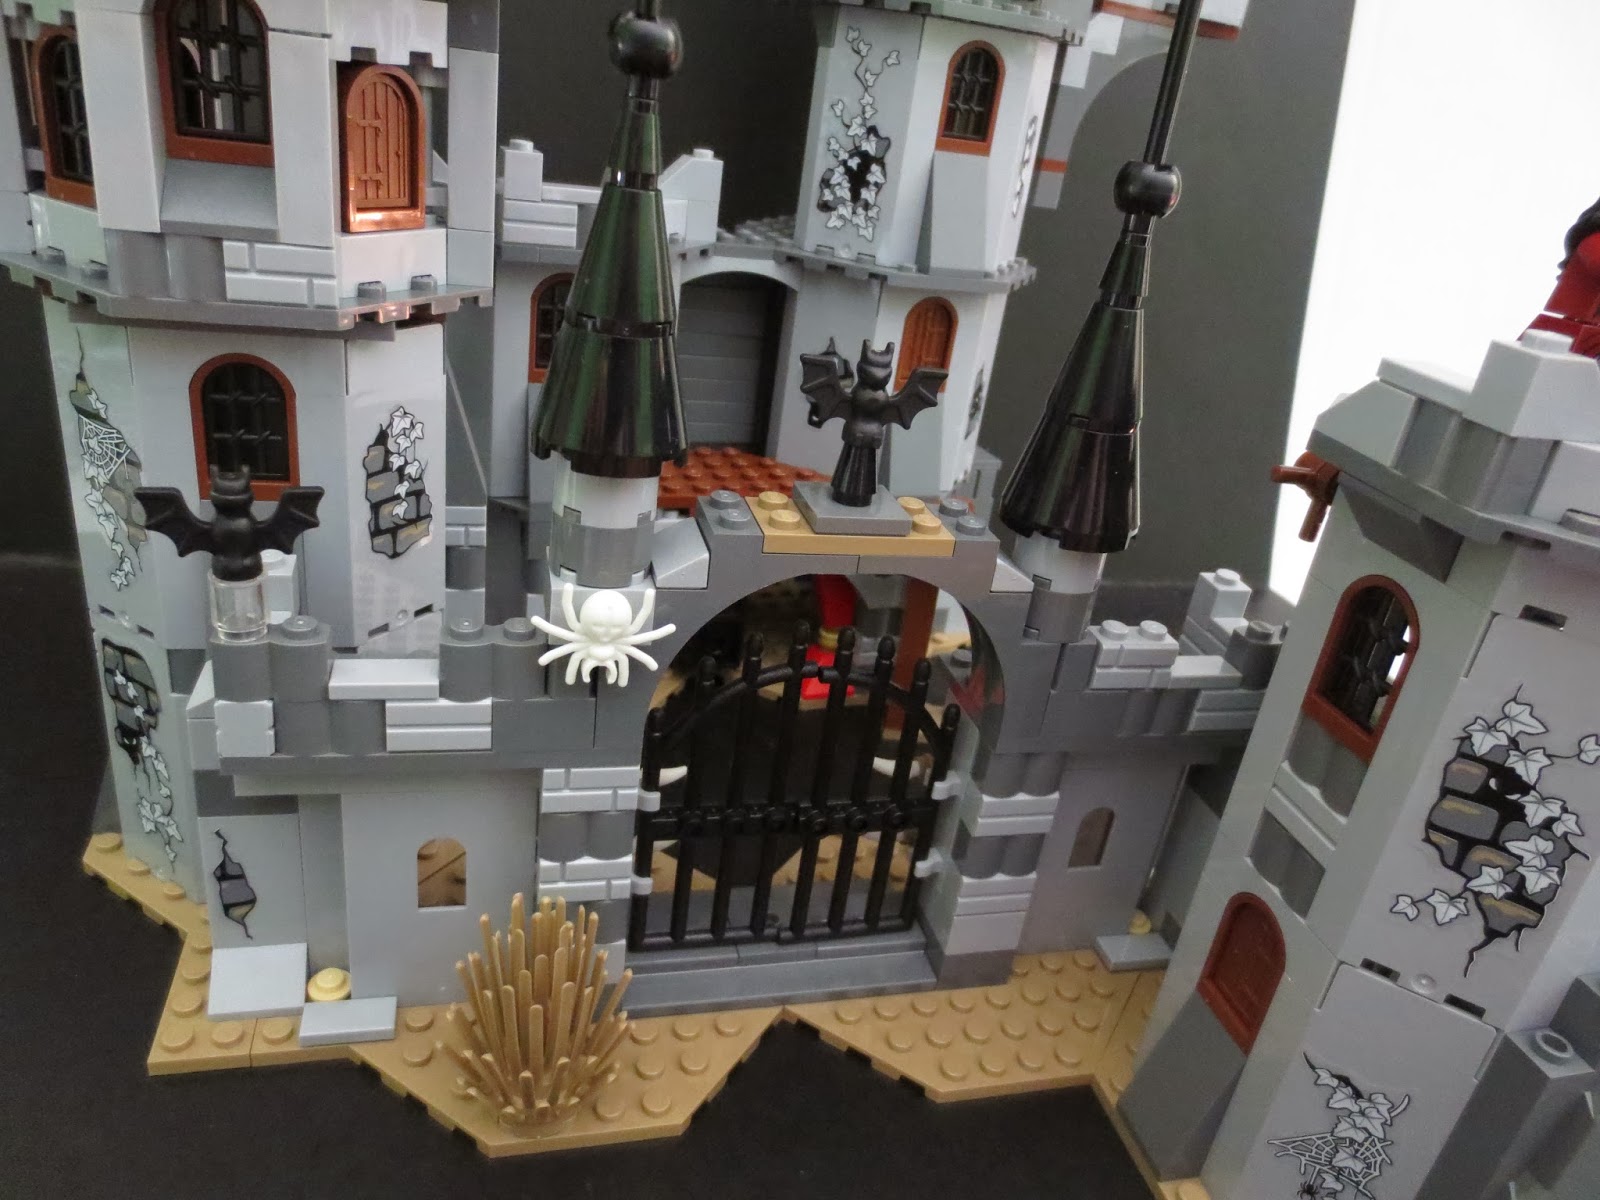 lego vampyre castle instructions